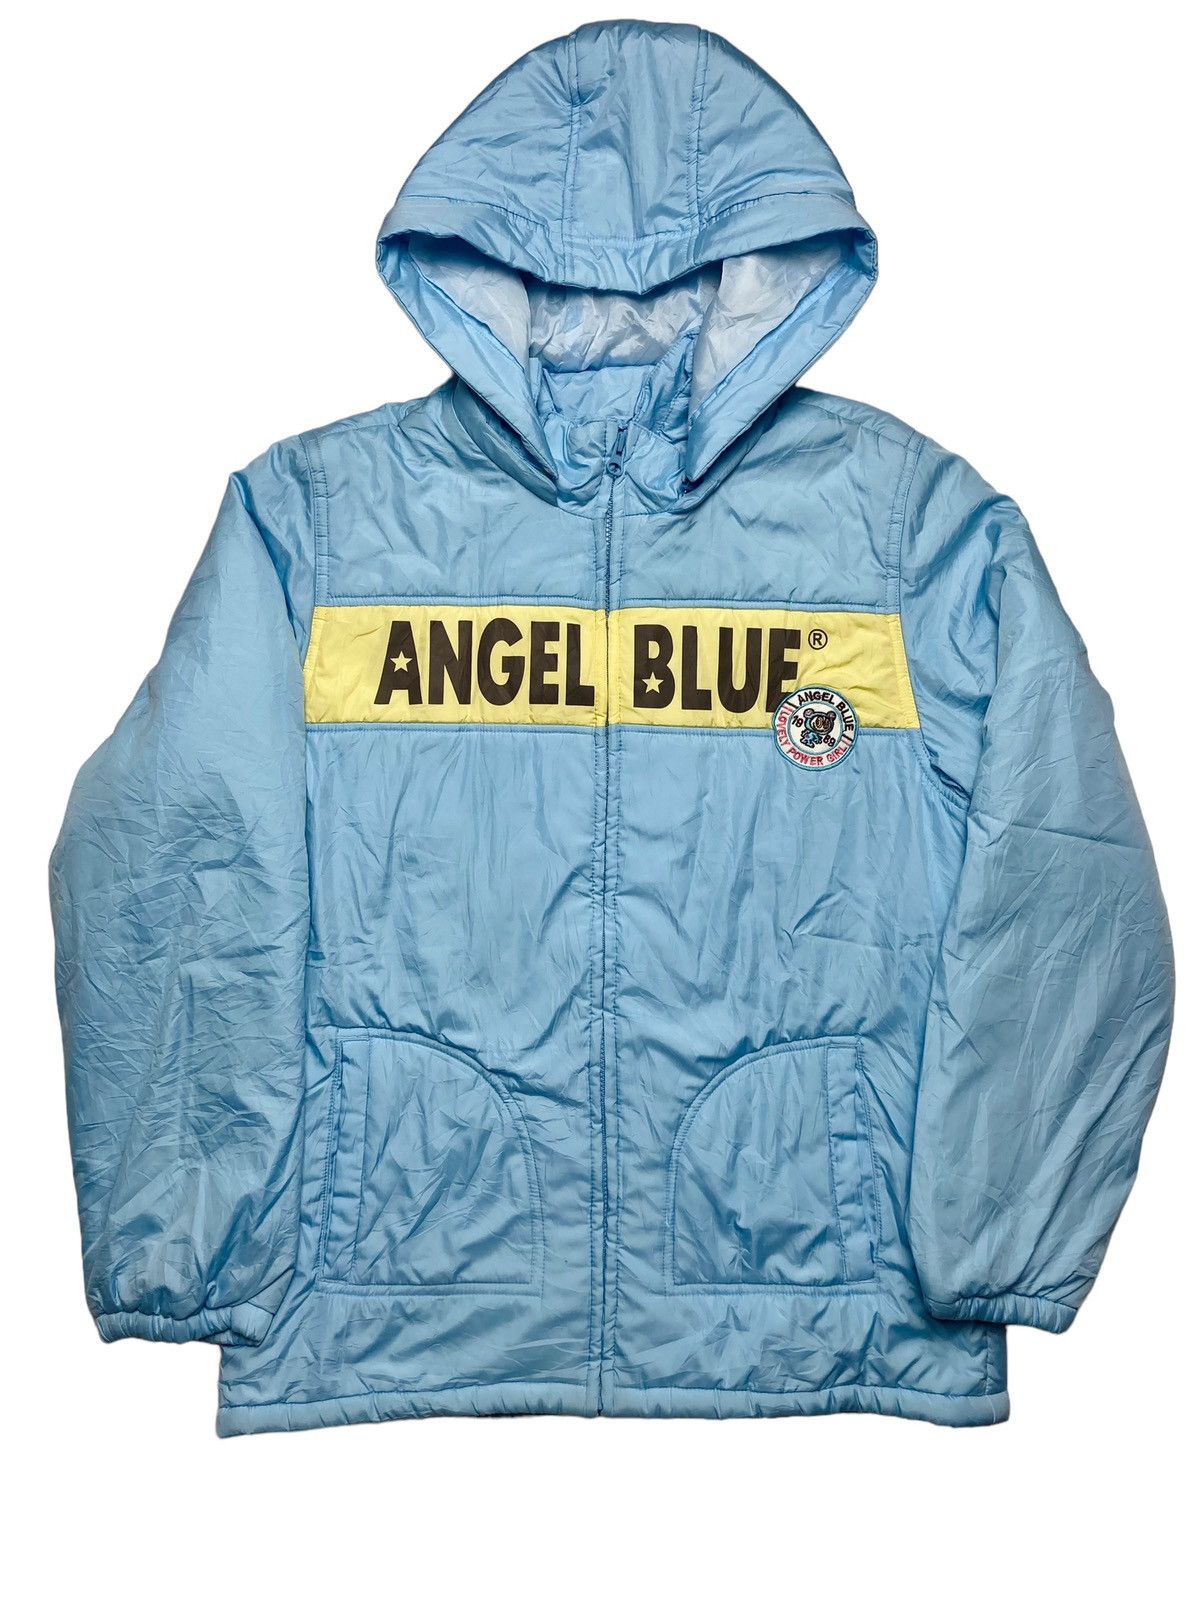 Angel Blue Jacket | Grailed